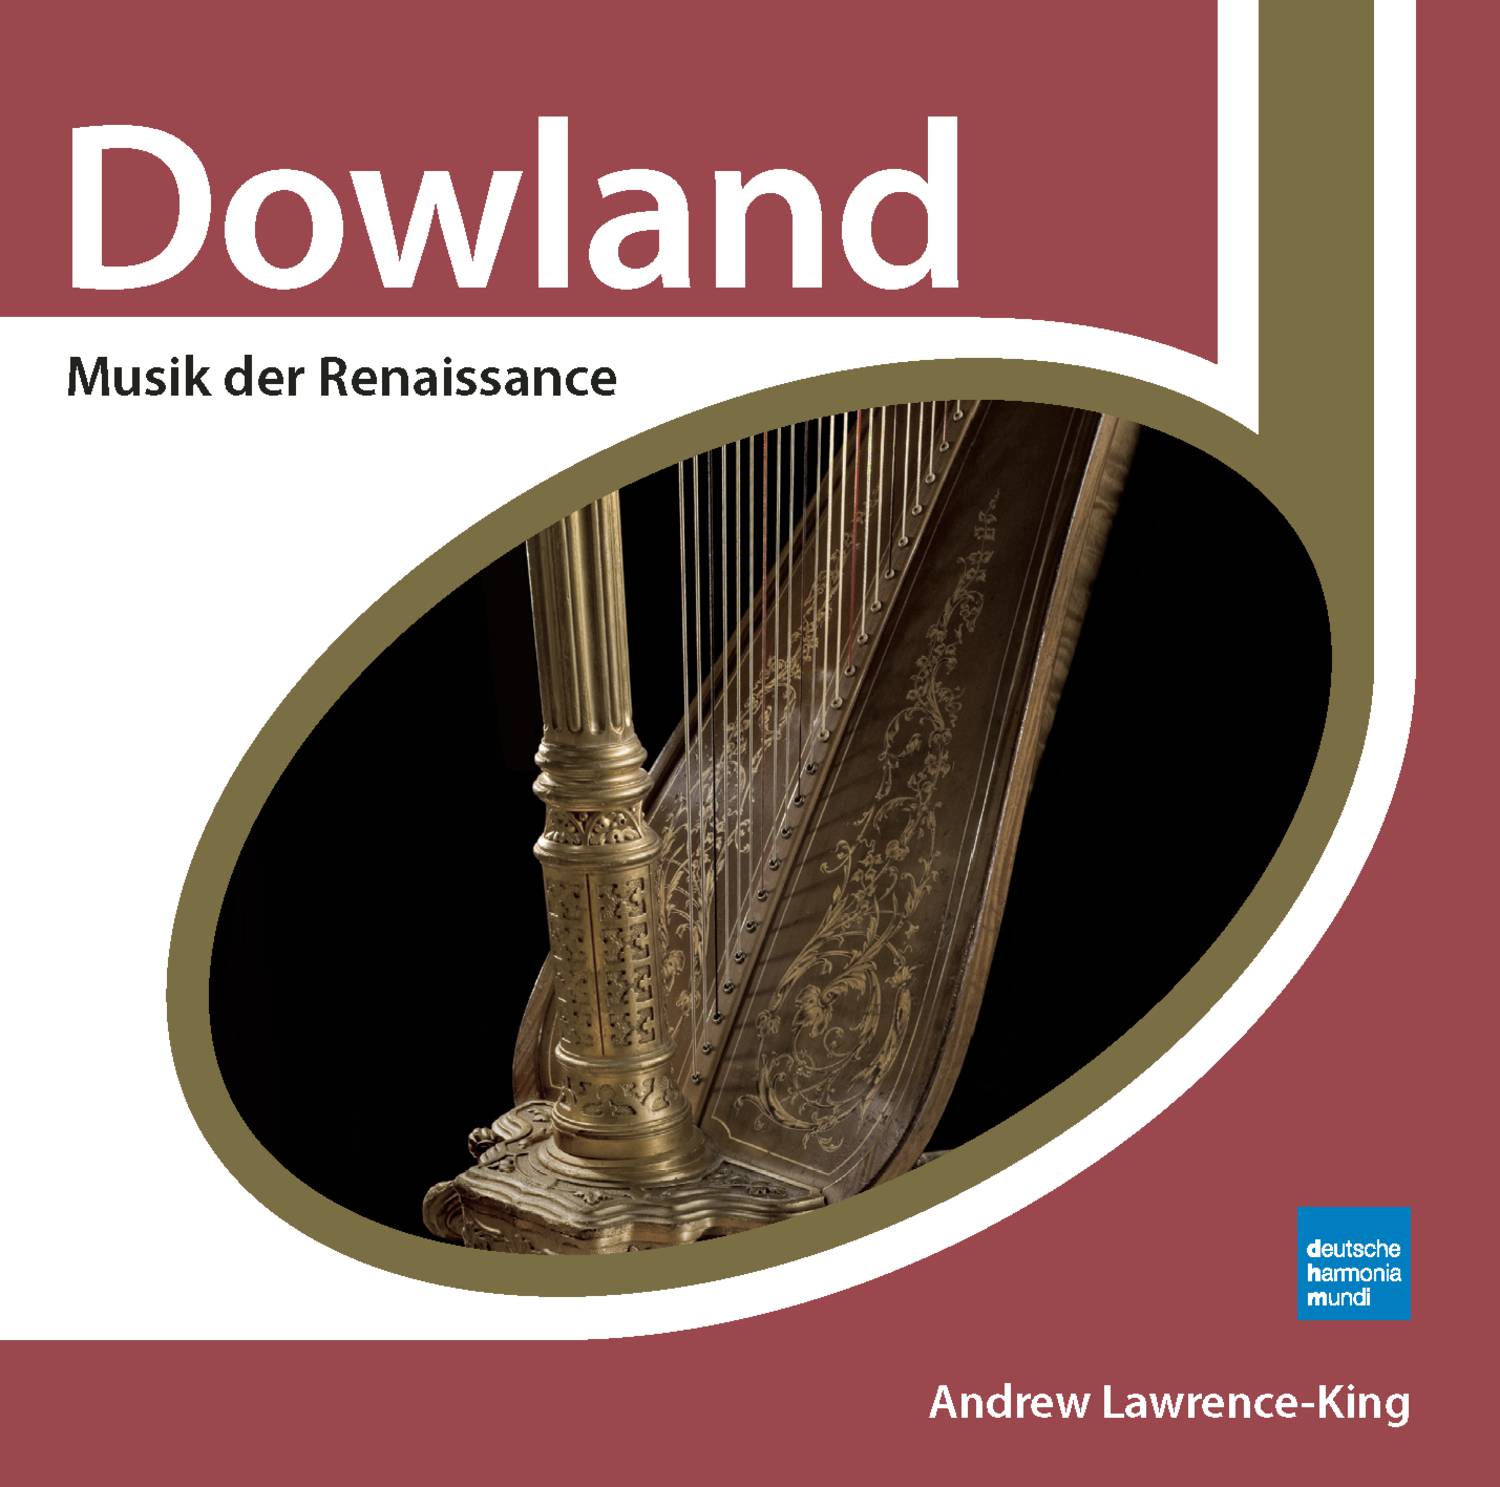 Rowland